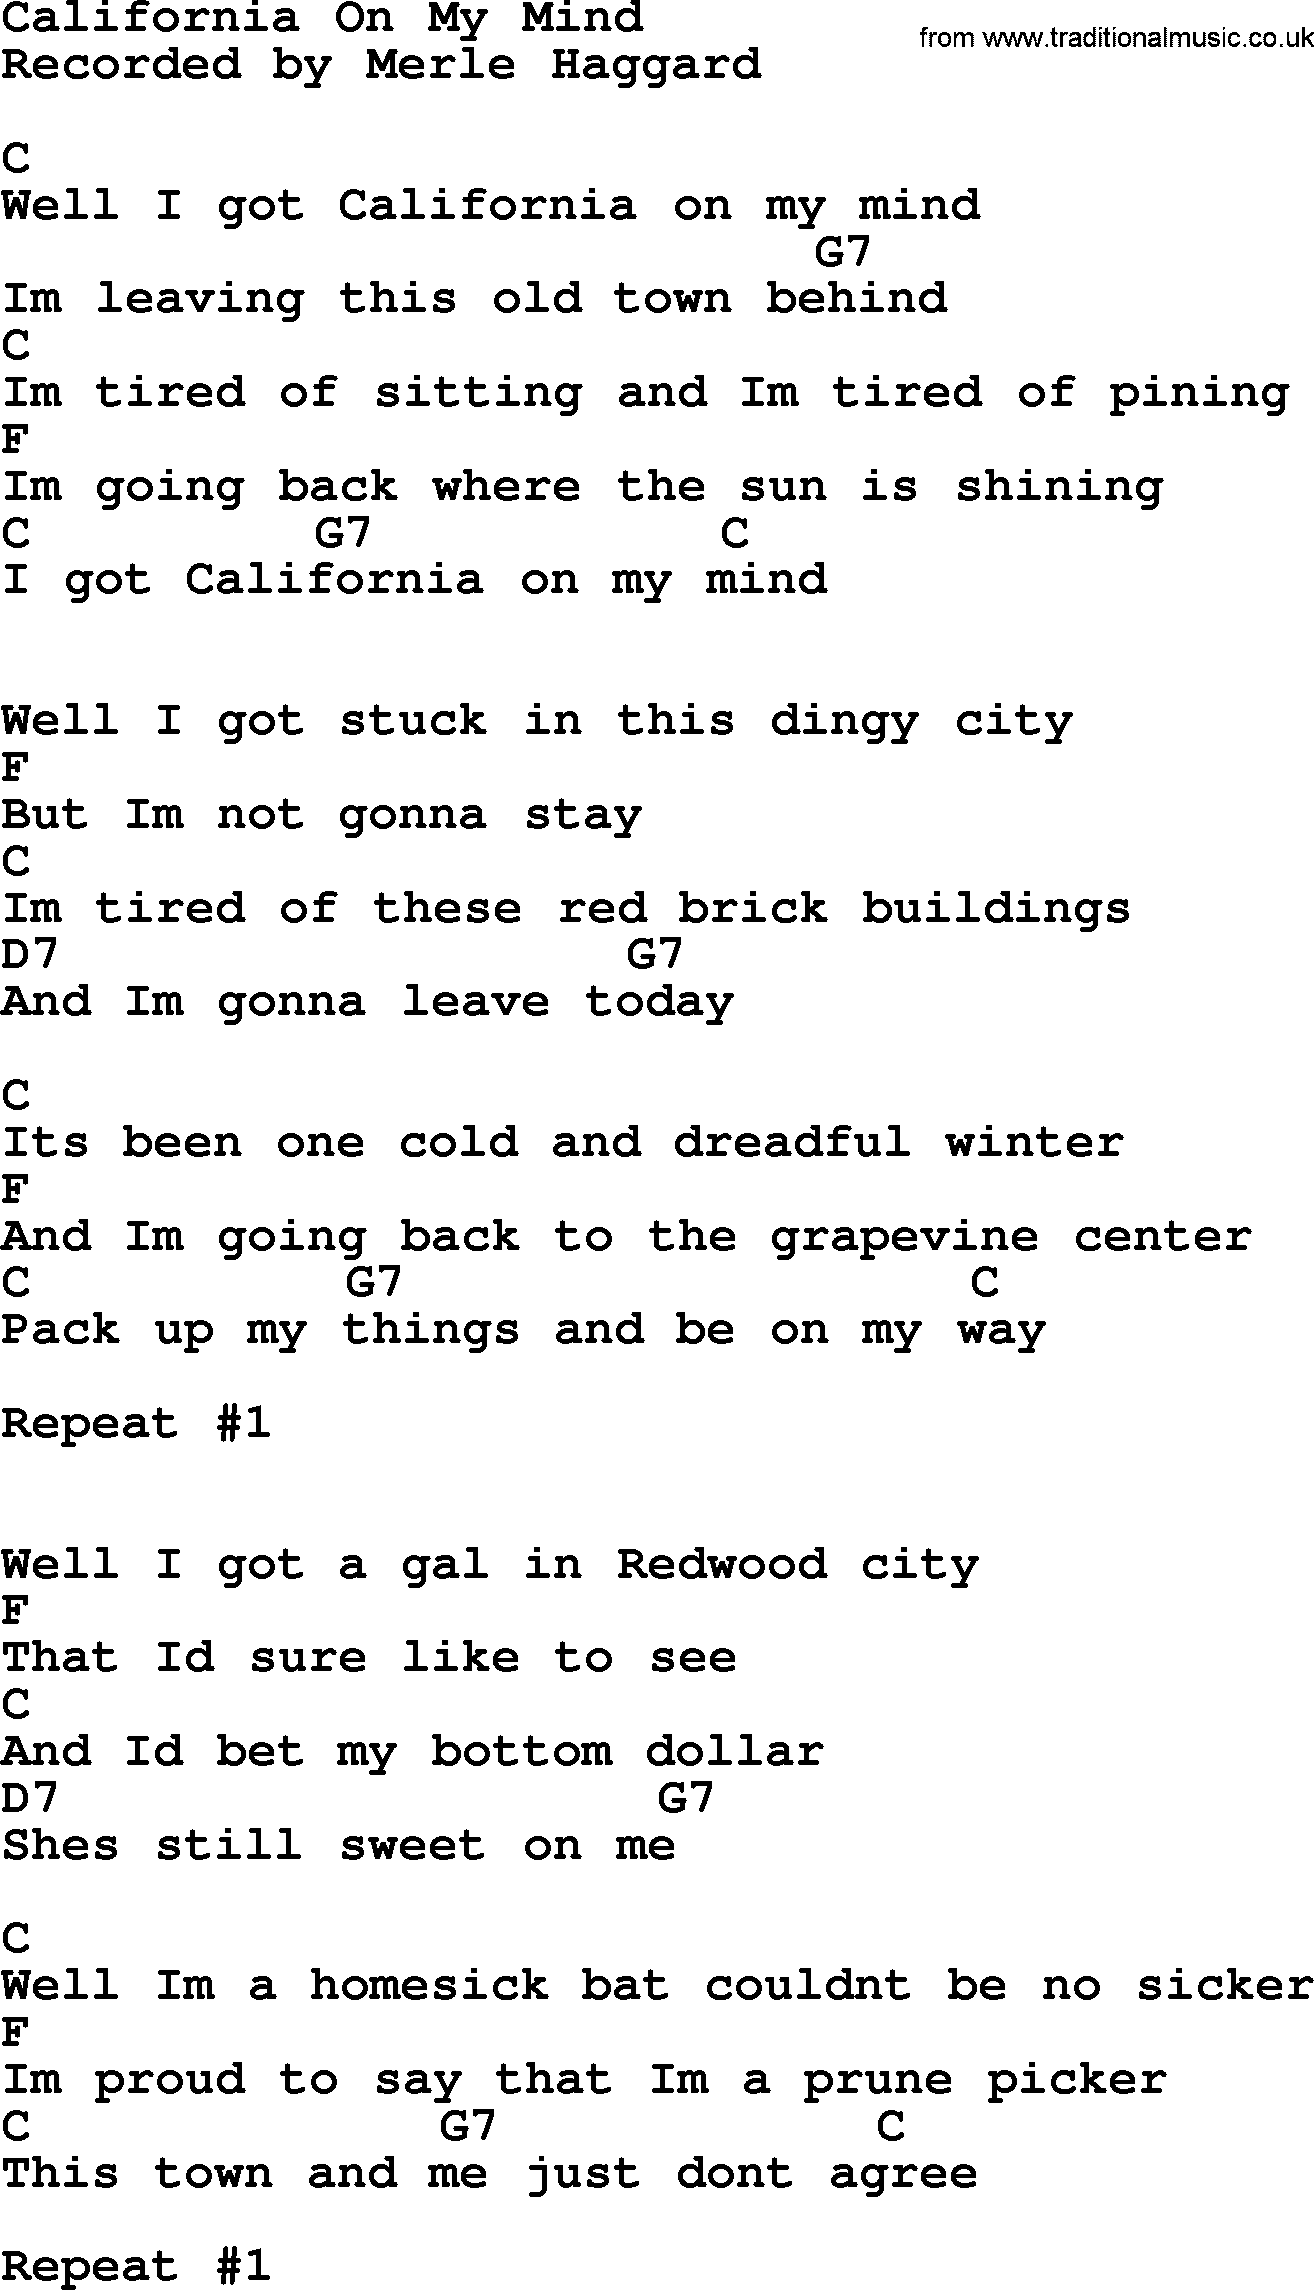 Merle Haggard song: California On My Mind, lyrics and chords